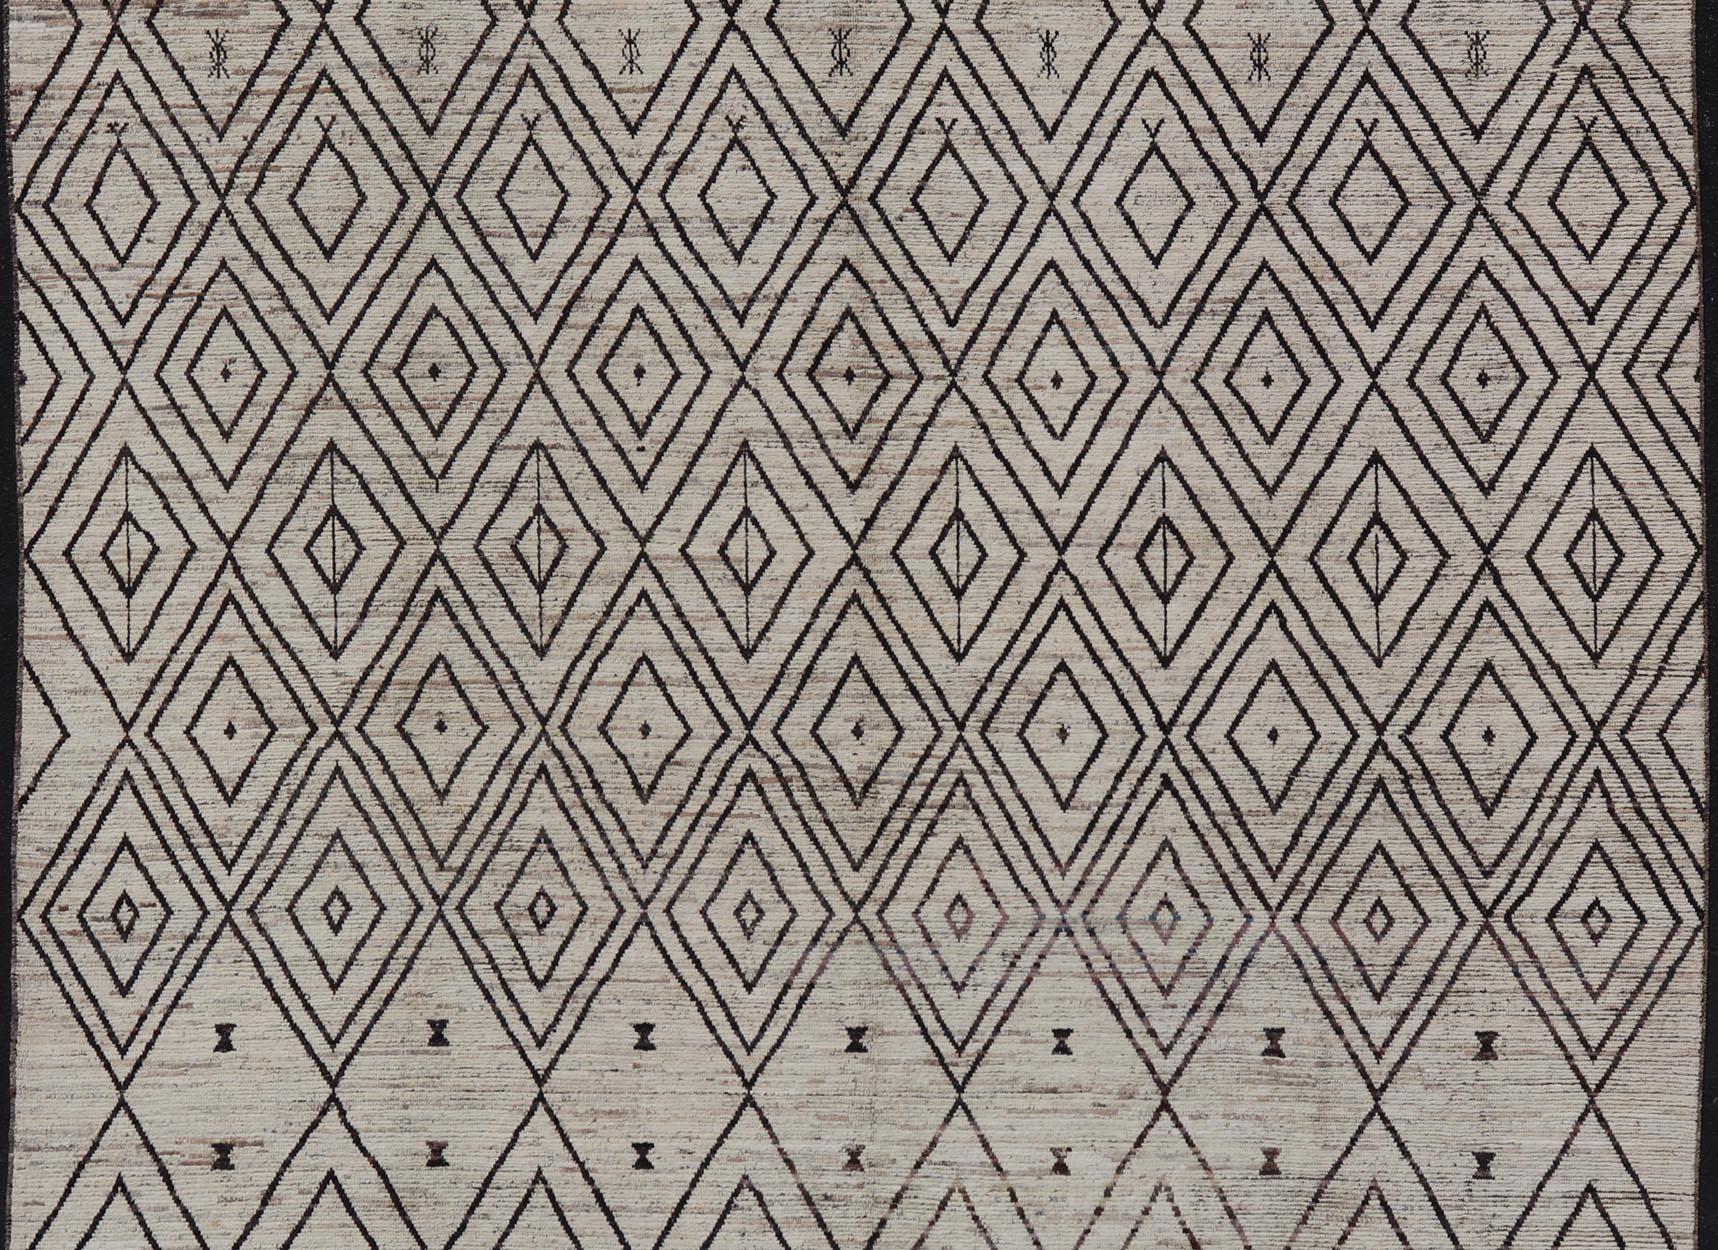  Tribal Moroccan Modern Rug in Wool with Geometric Diamond Design  For Sale 6